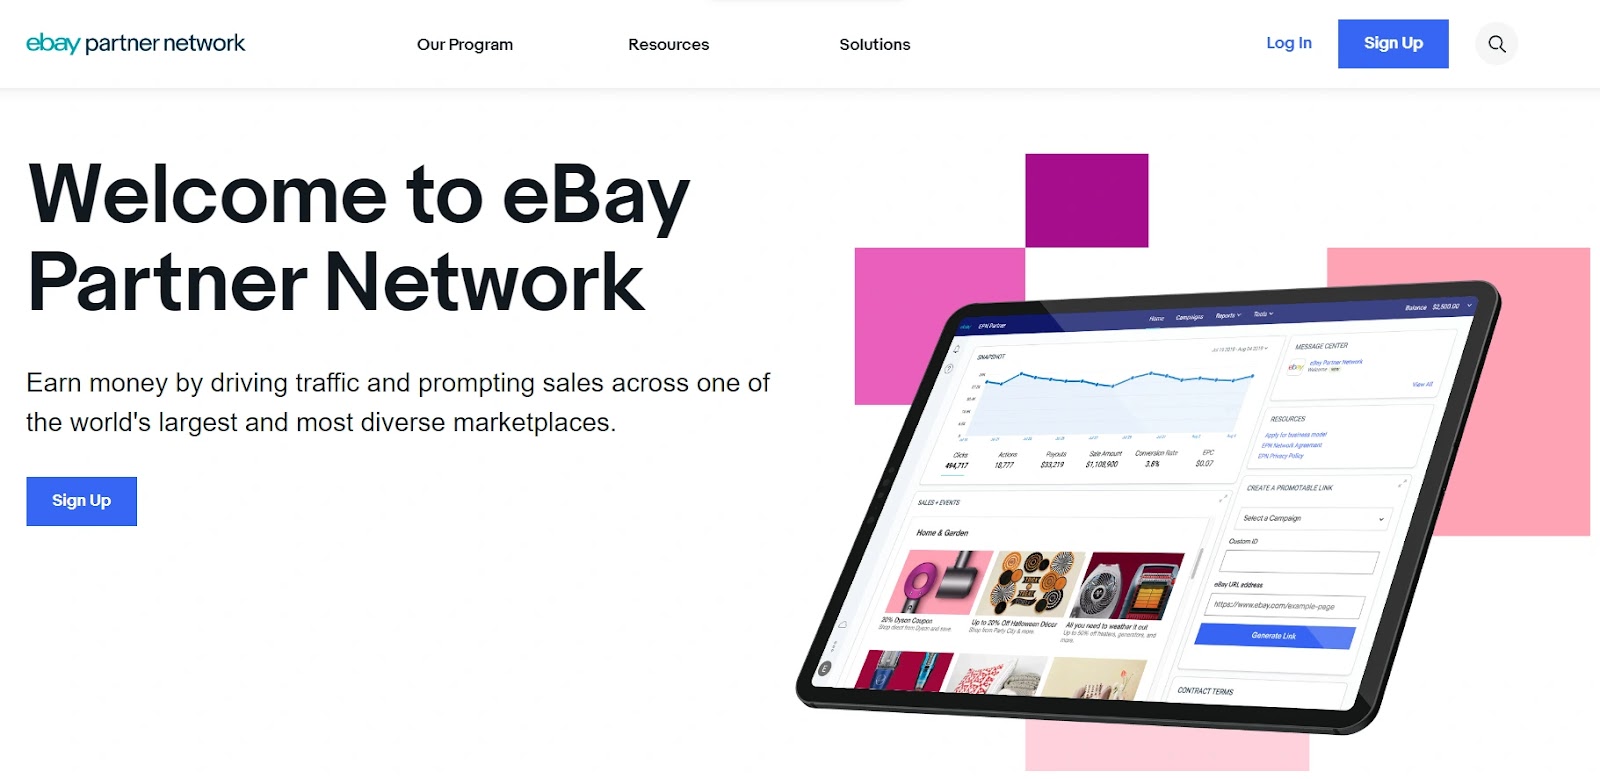 eBay Partner Network landing page